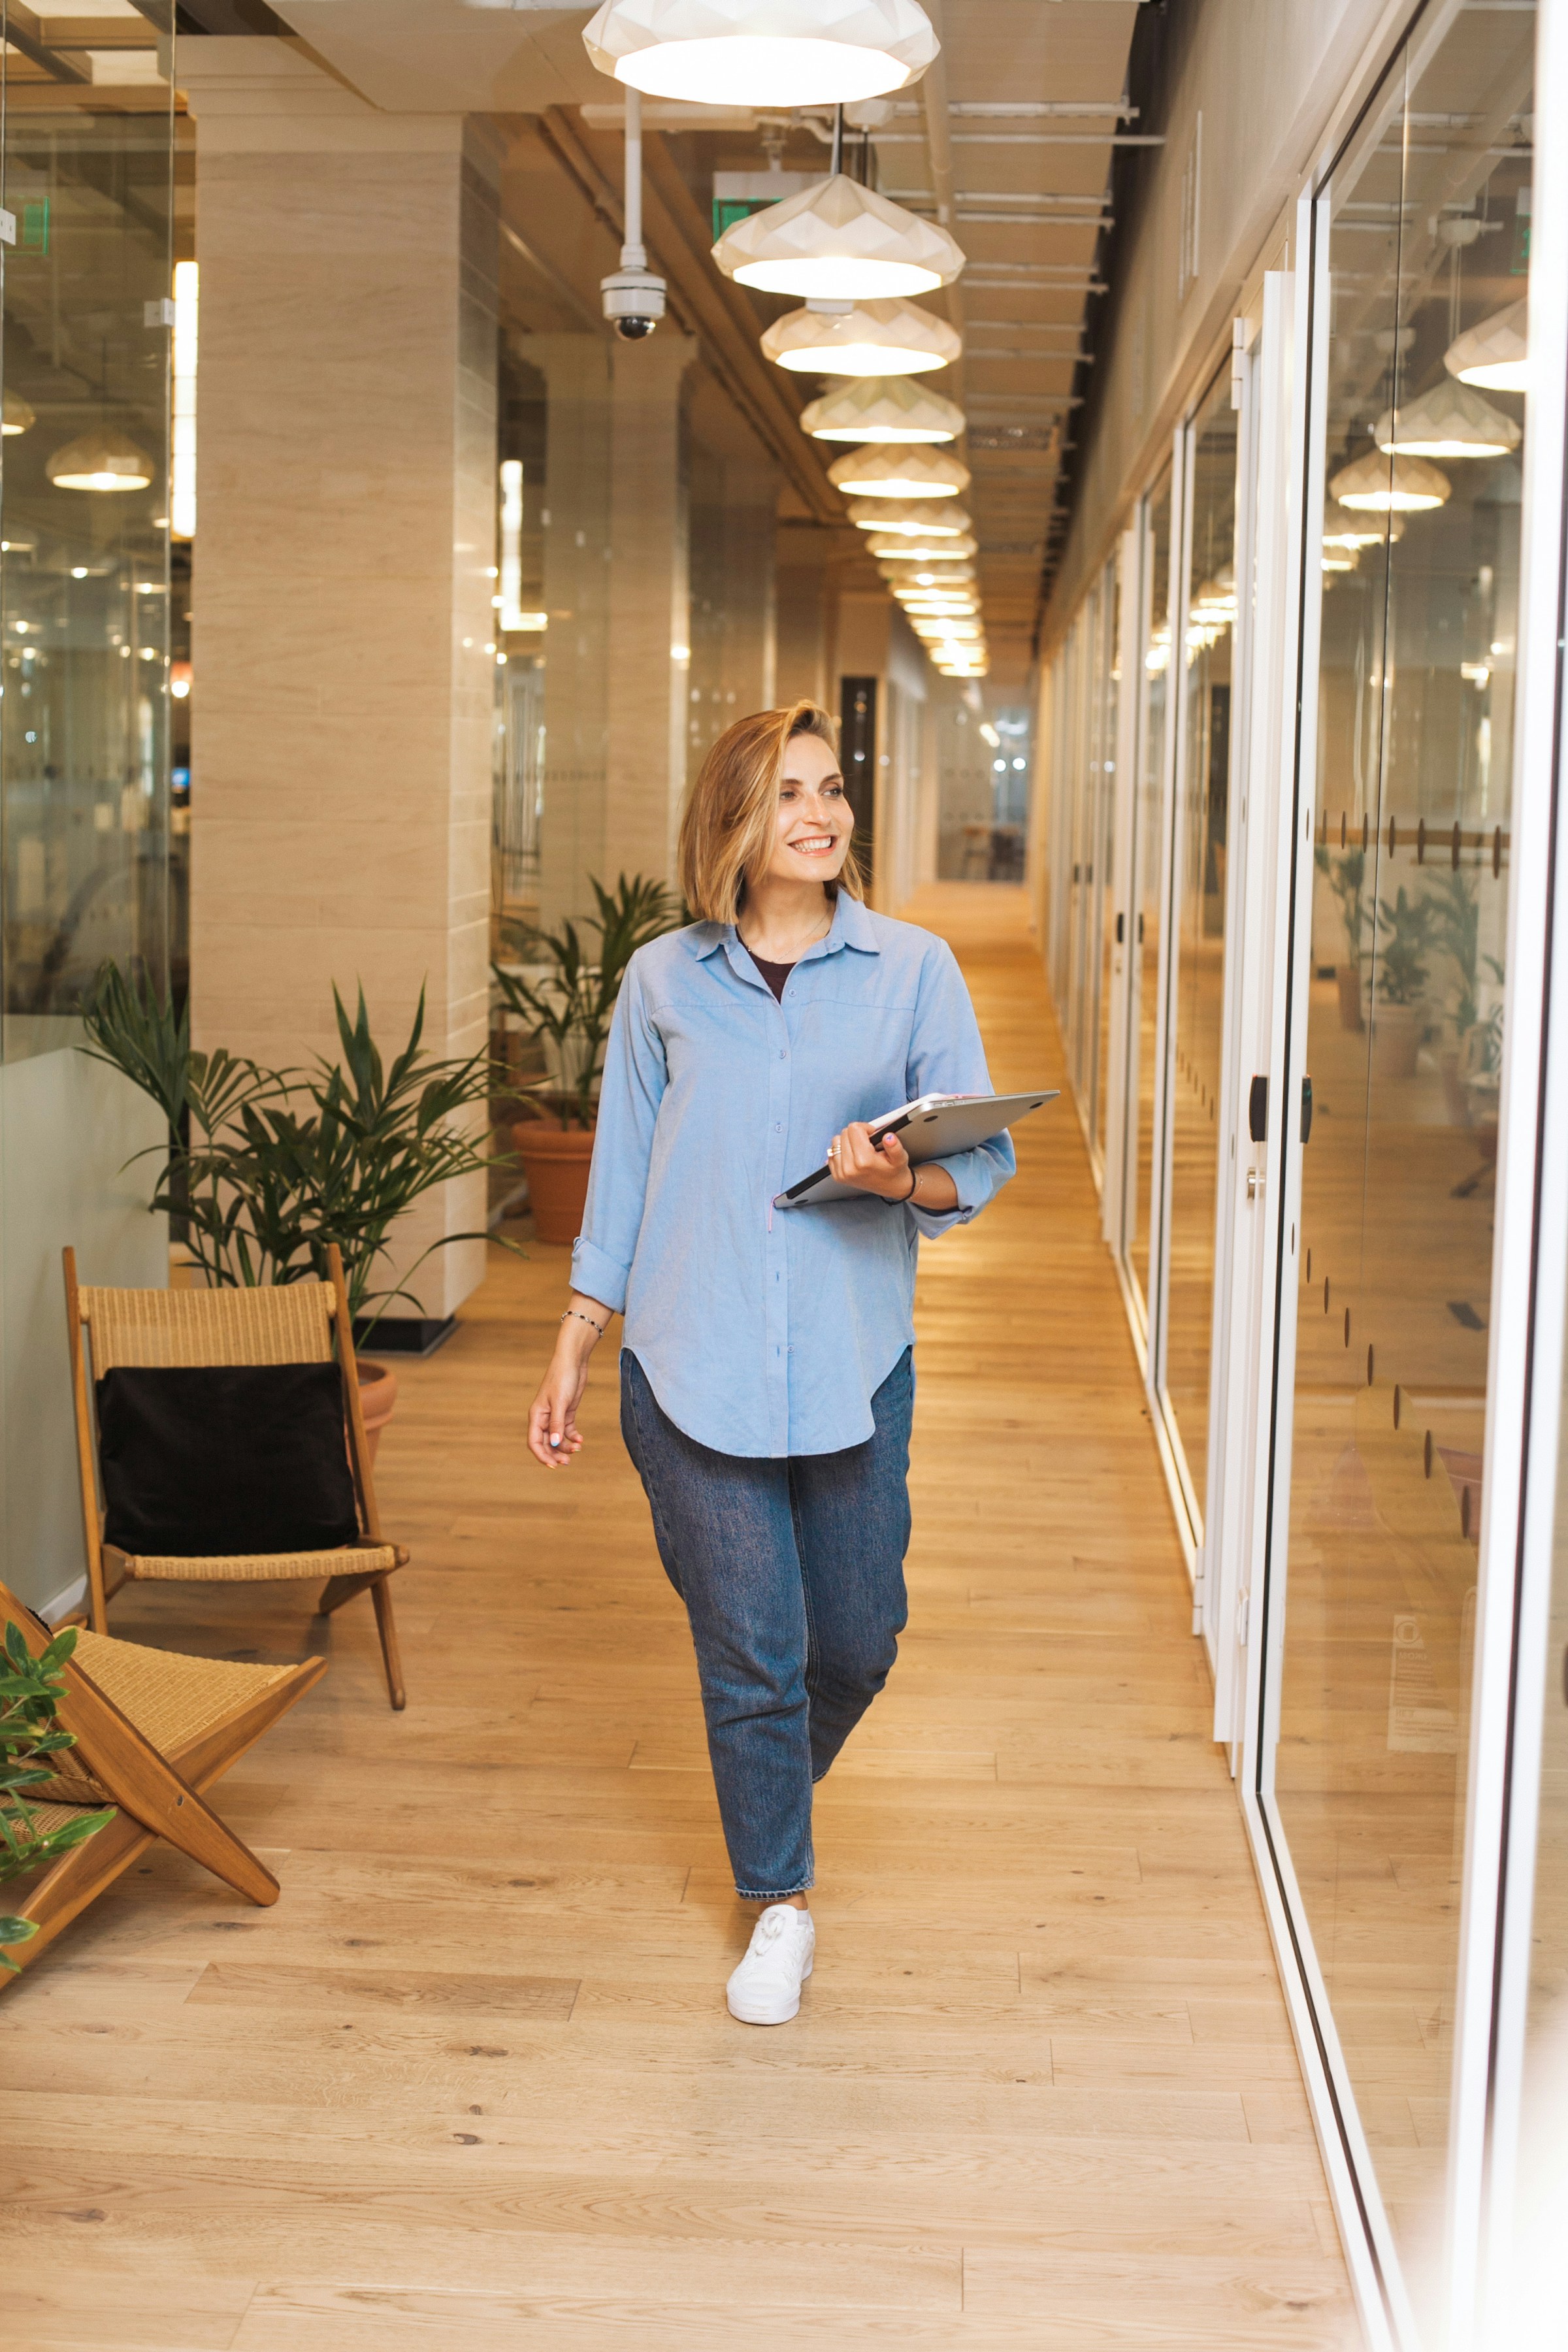 A female businesswoman walking in the office corridor | Source: Unsplash